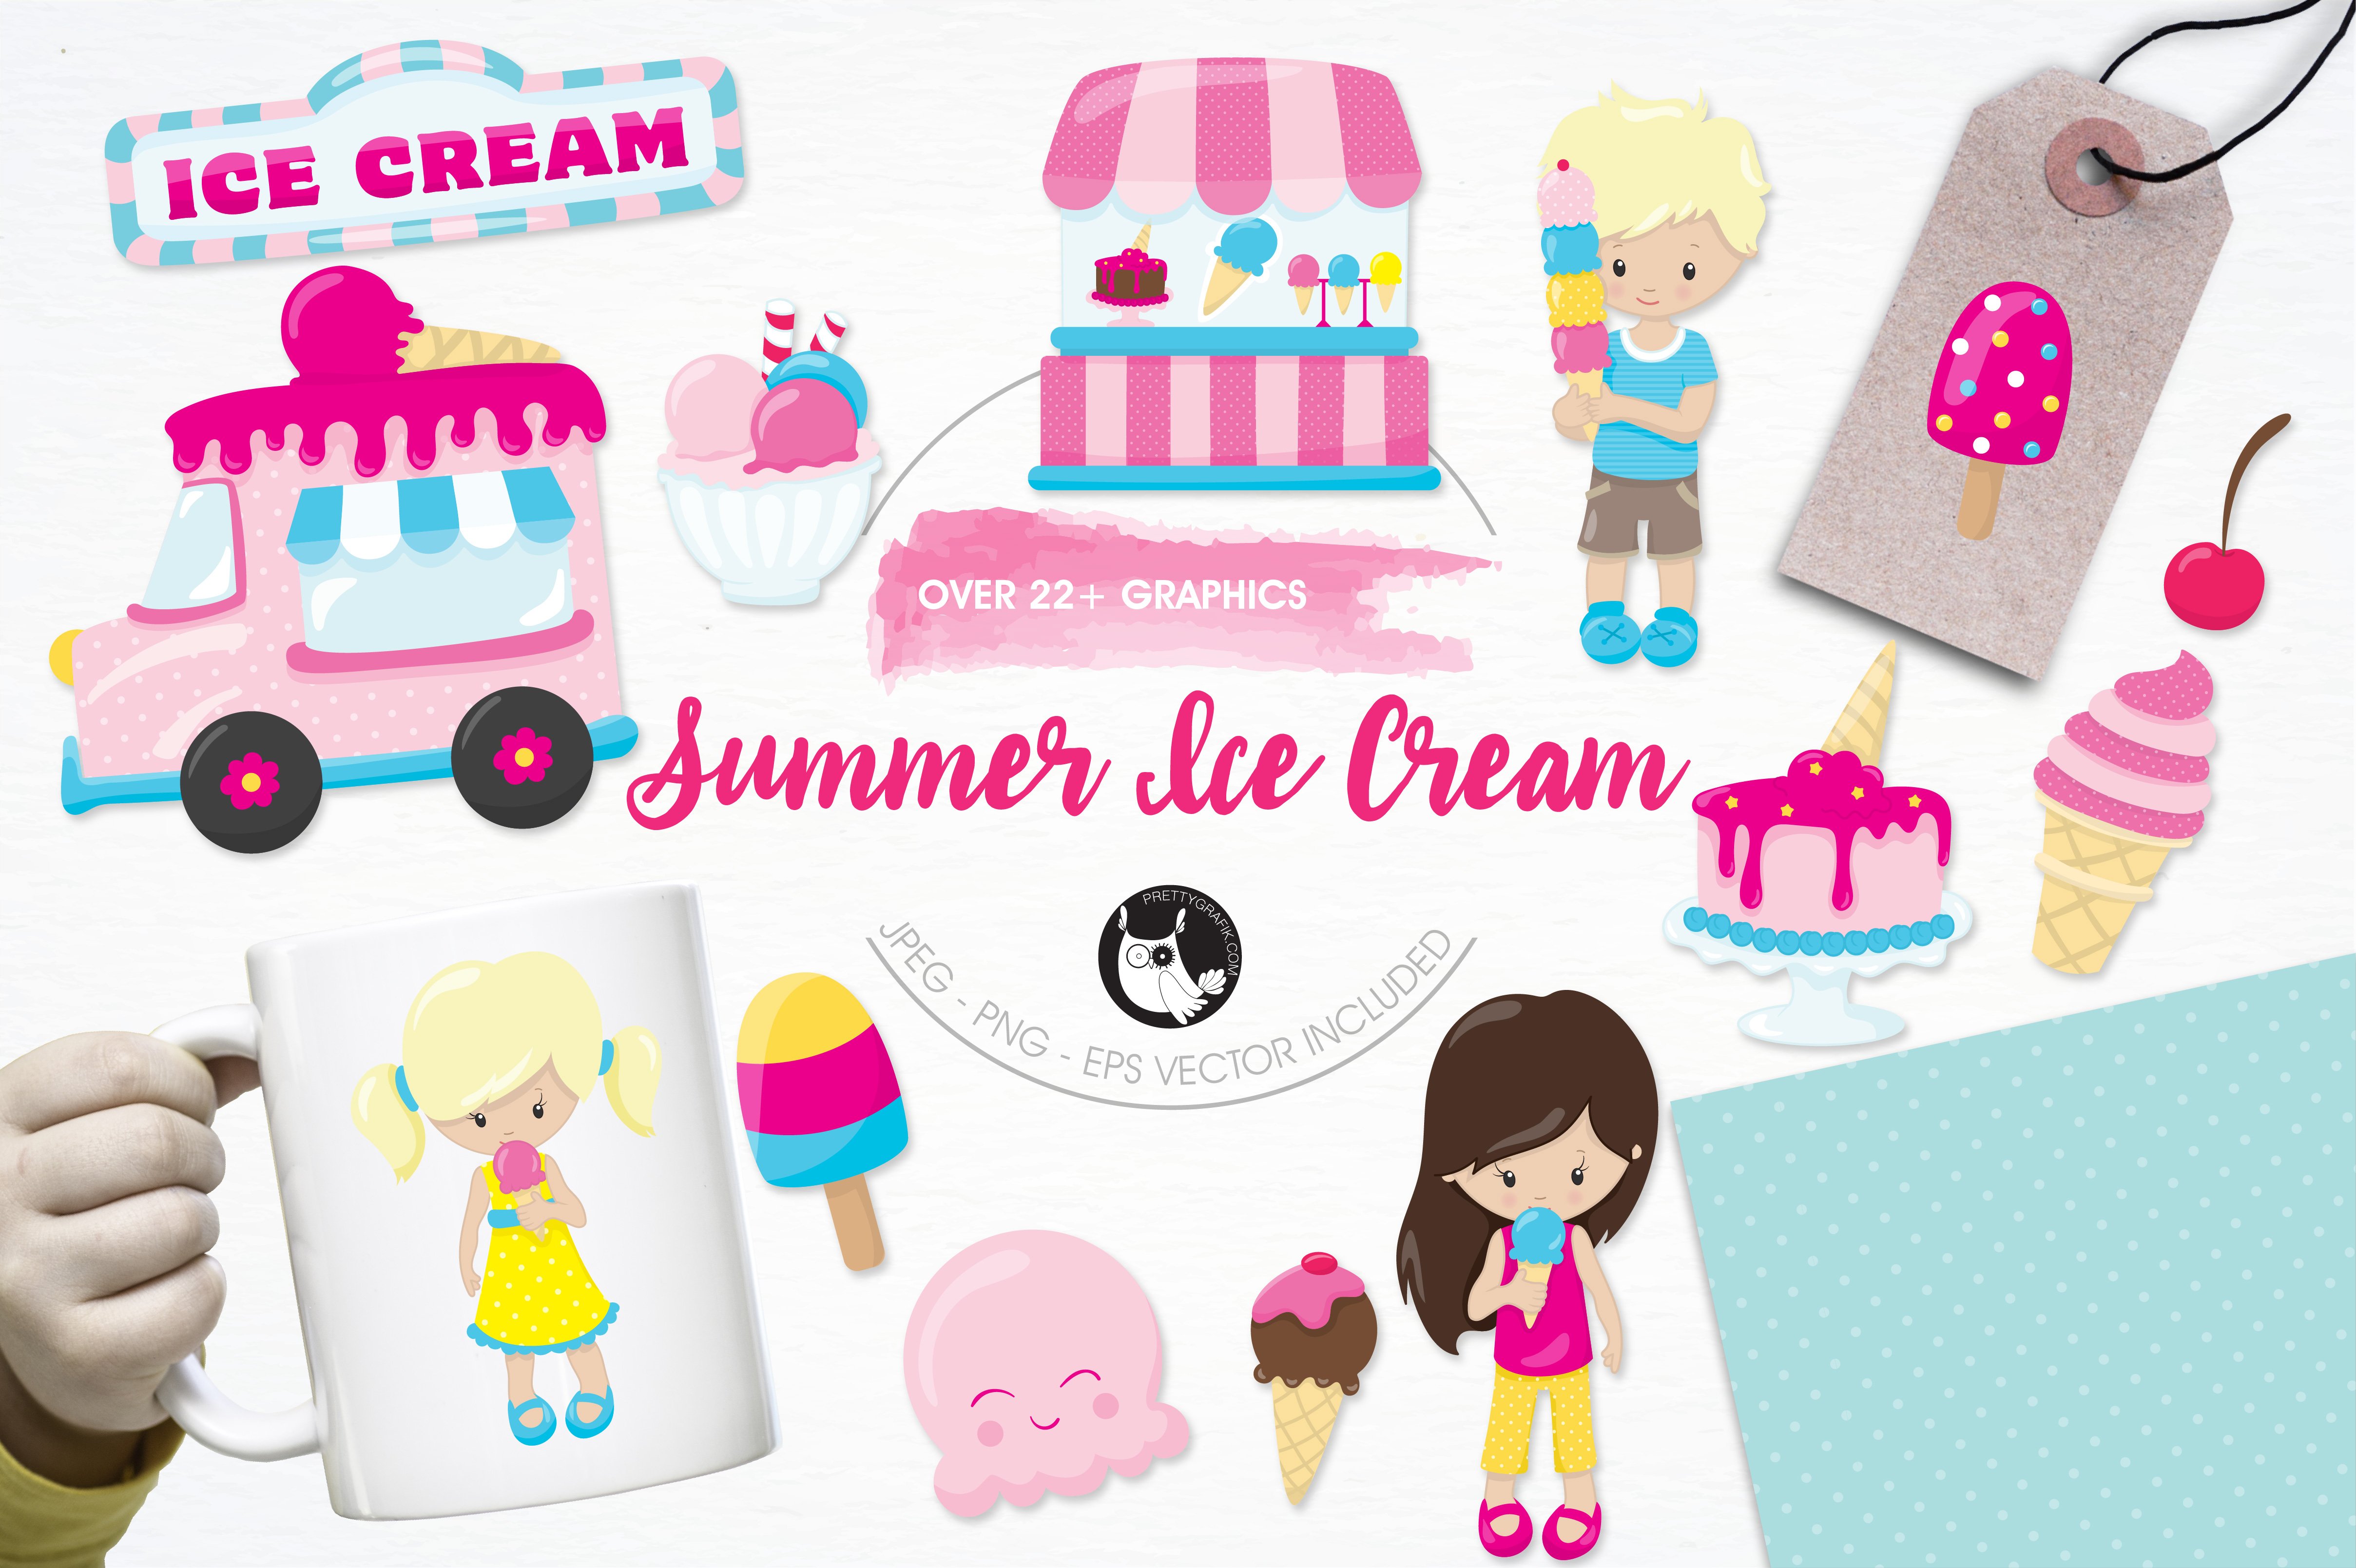 Summer ice cream illustration pack - Vector Image